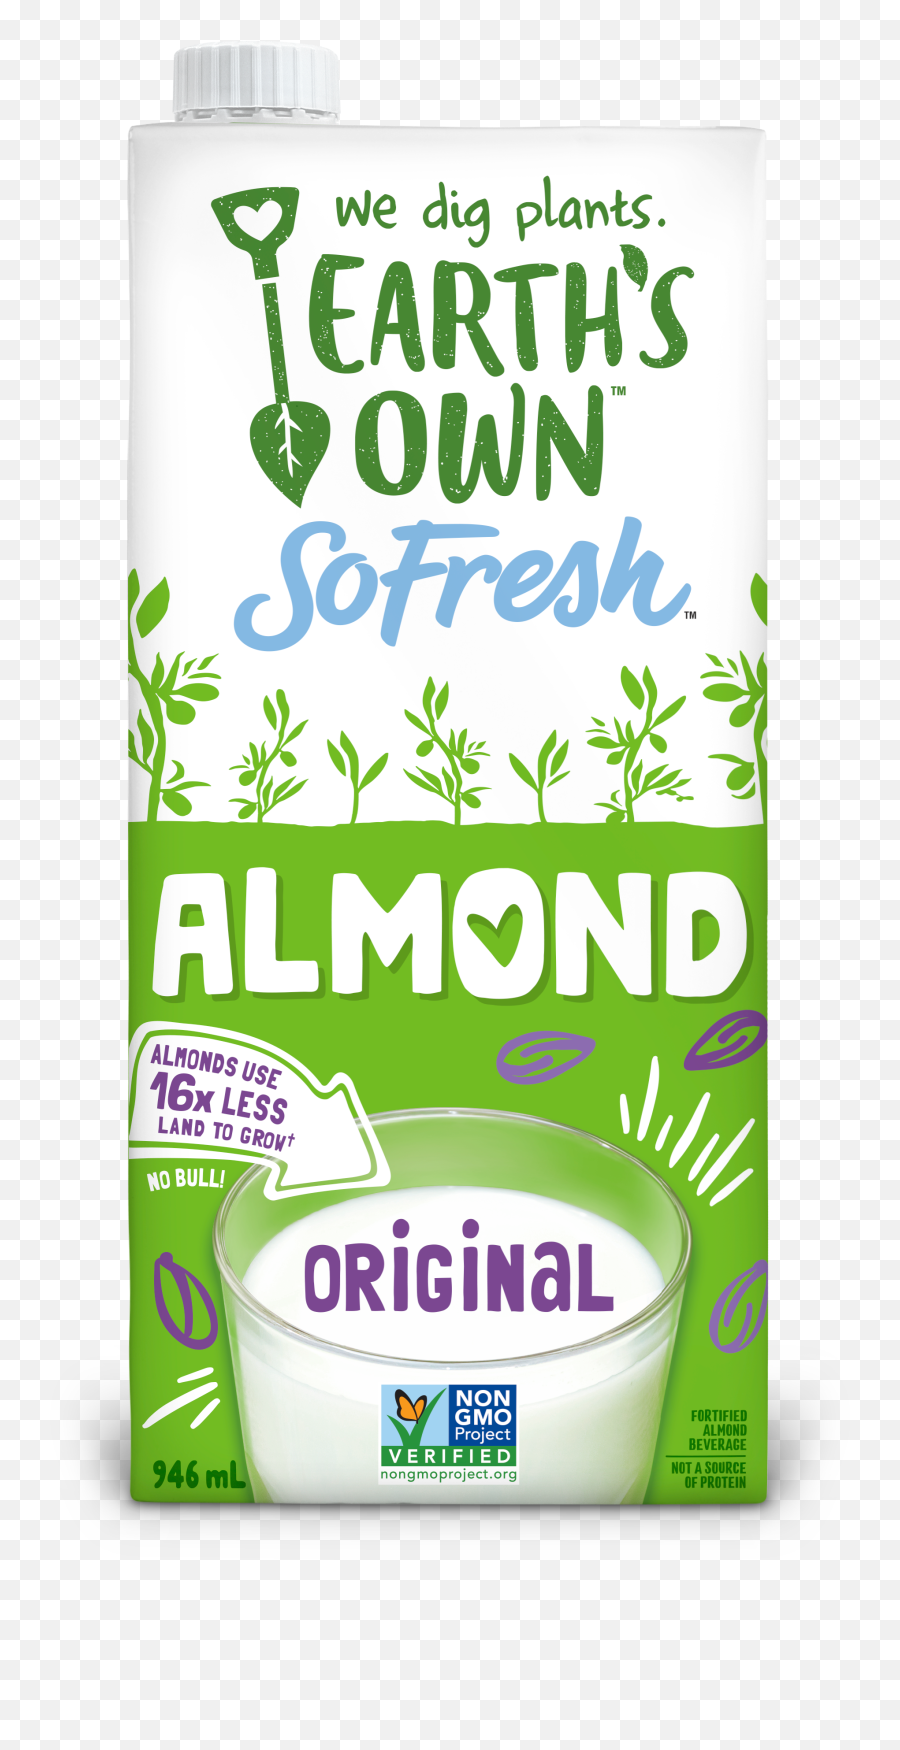 Earthu0027s Own Original Almond Milk Almond Products Emoji,Facebook Emoticons Almond